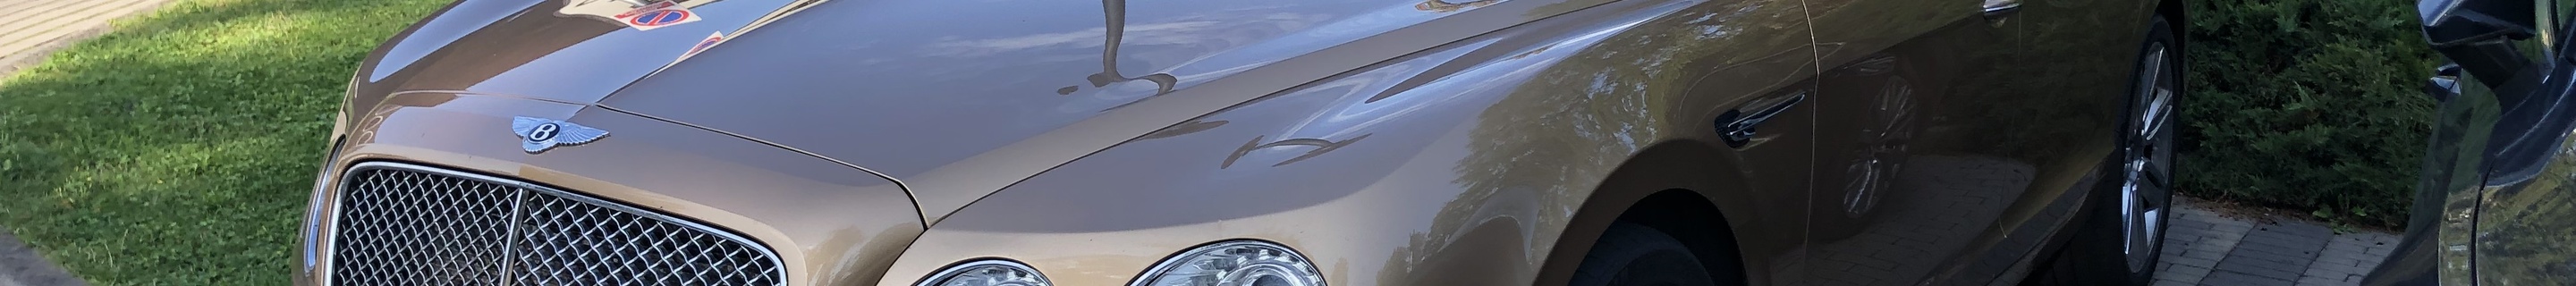 Bentley Flying Spur W12